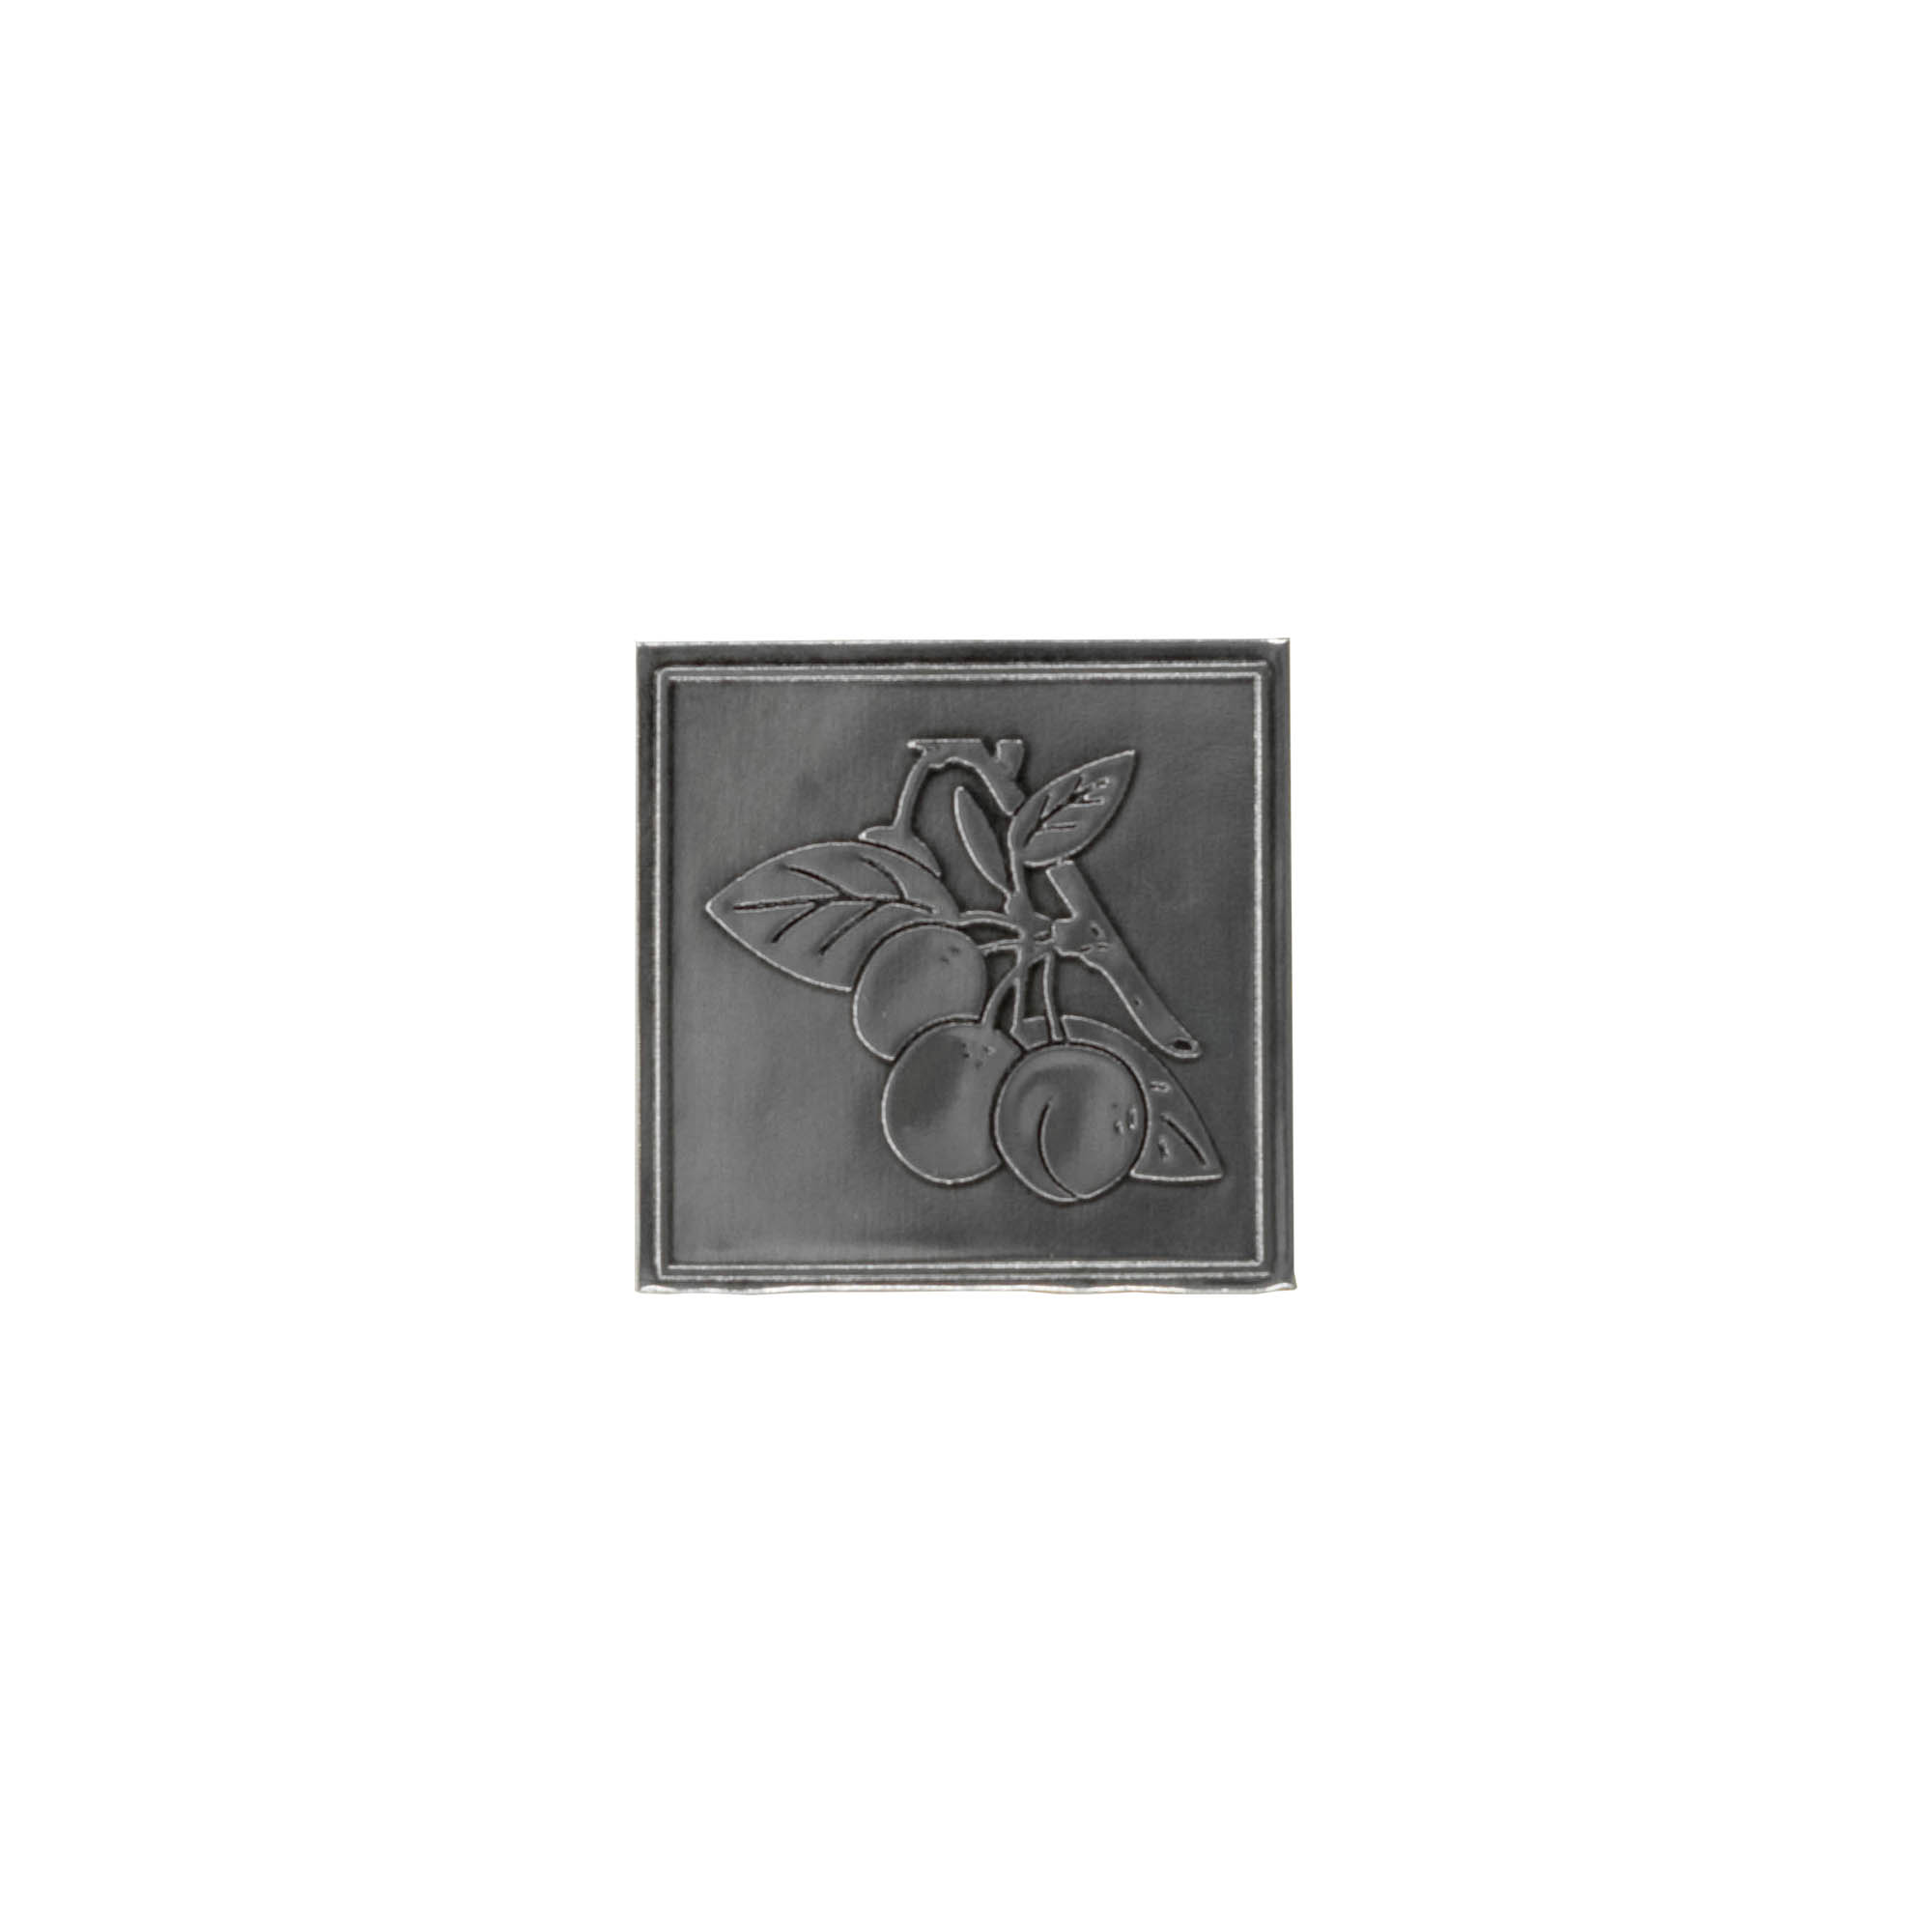 Etichetta metallica 'Mirabelle', quadrata, stagno, argento